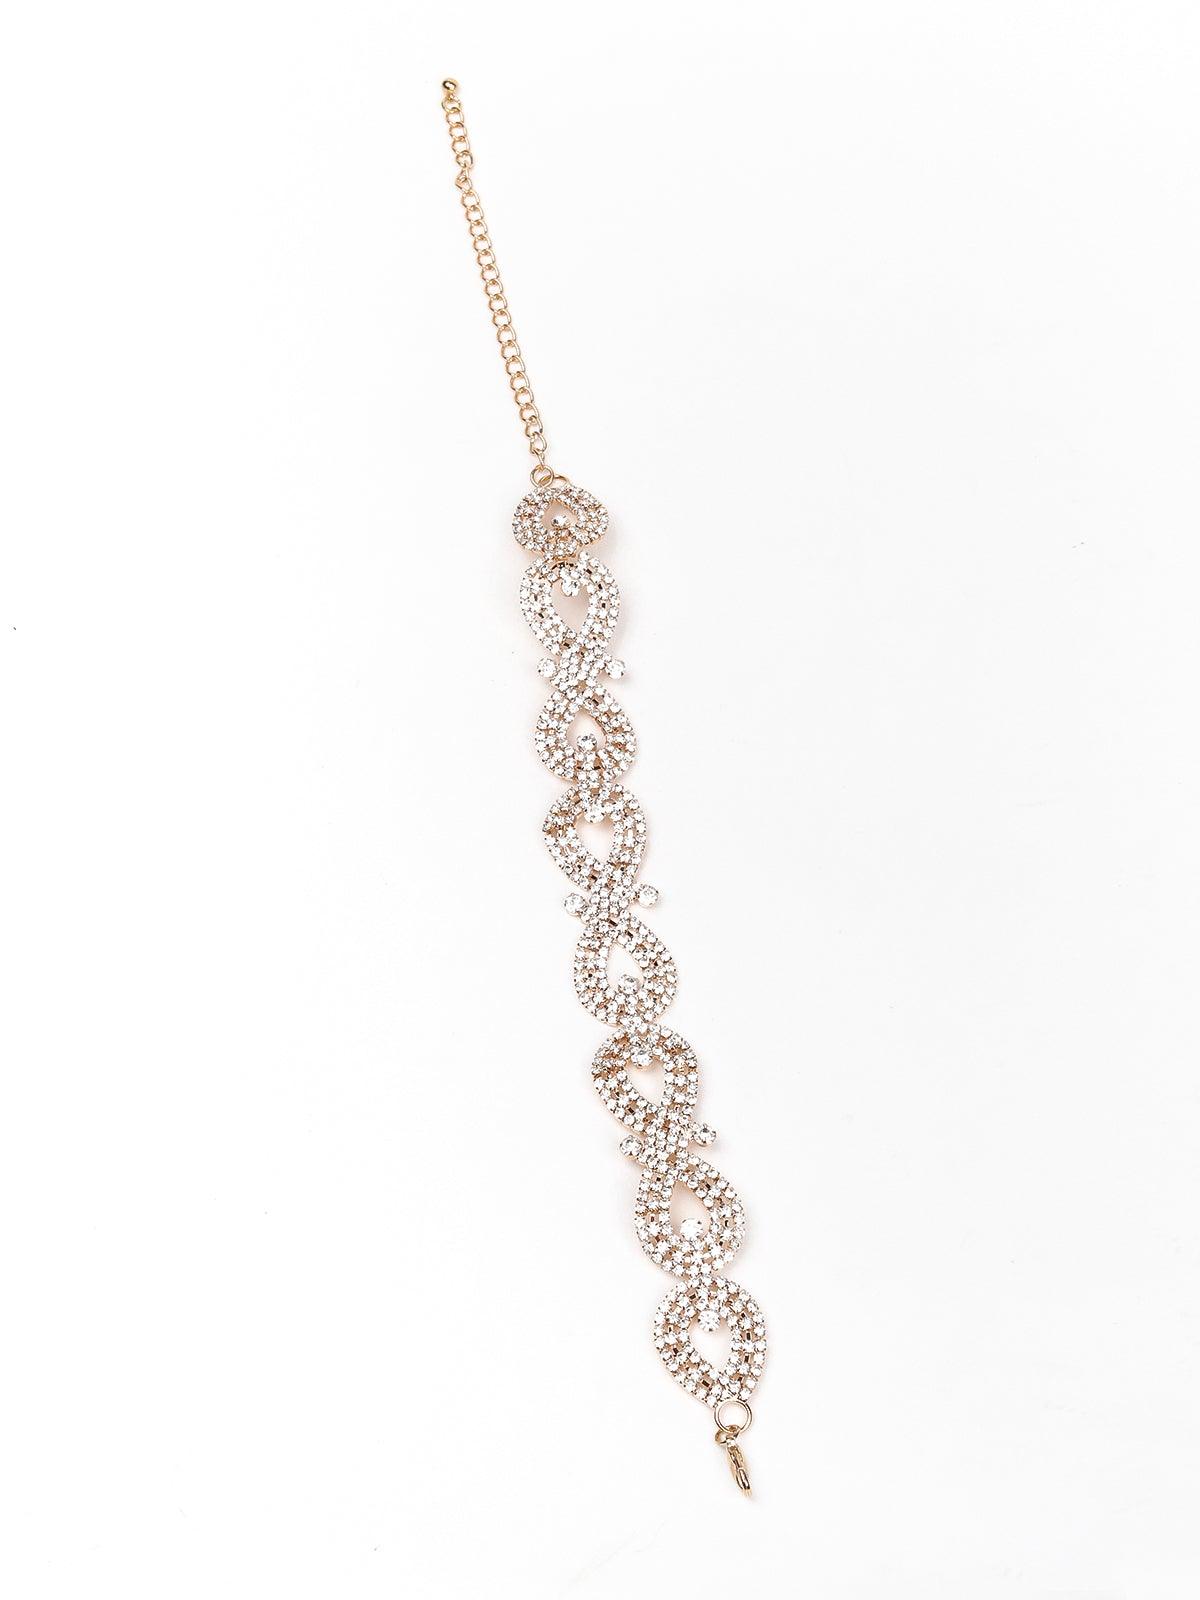 Women's Infinity Designer Studded Choker Necklace-Gold - Odette